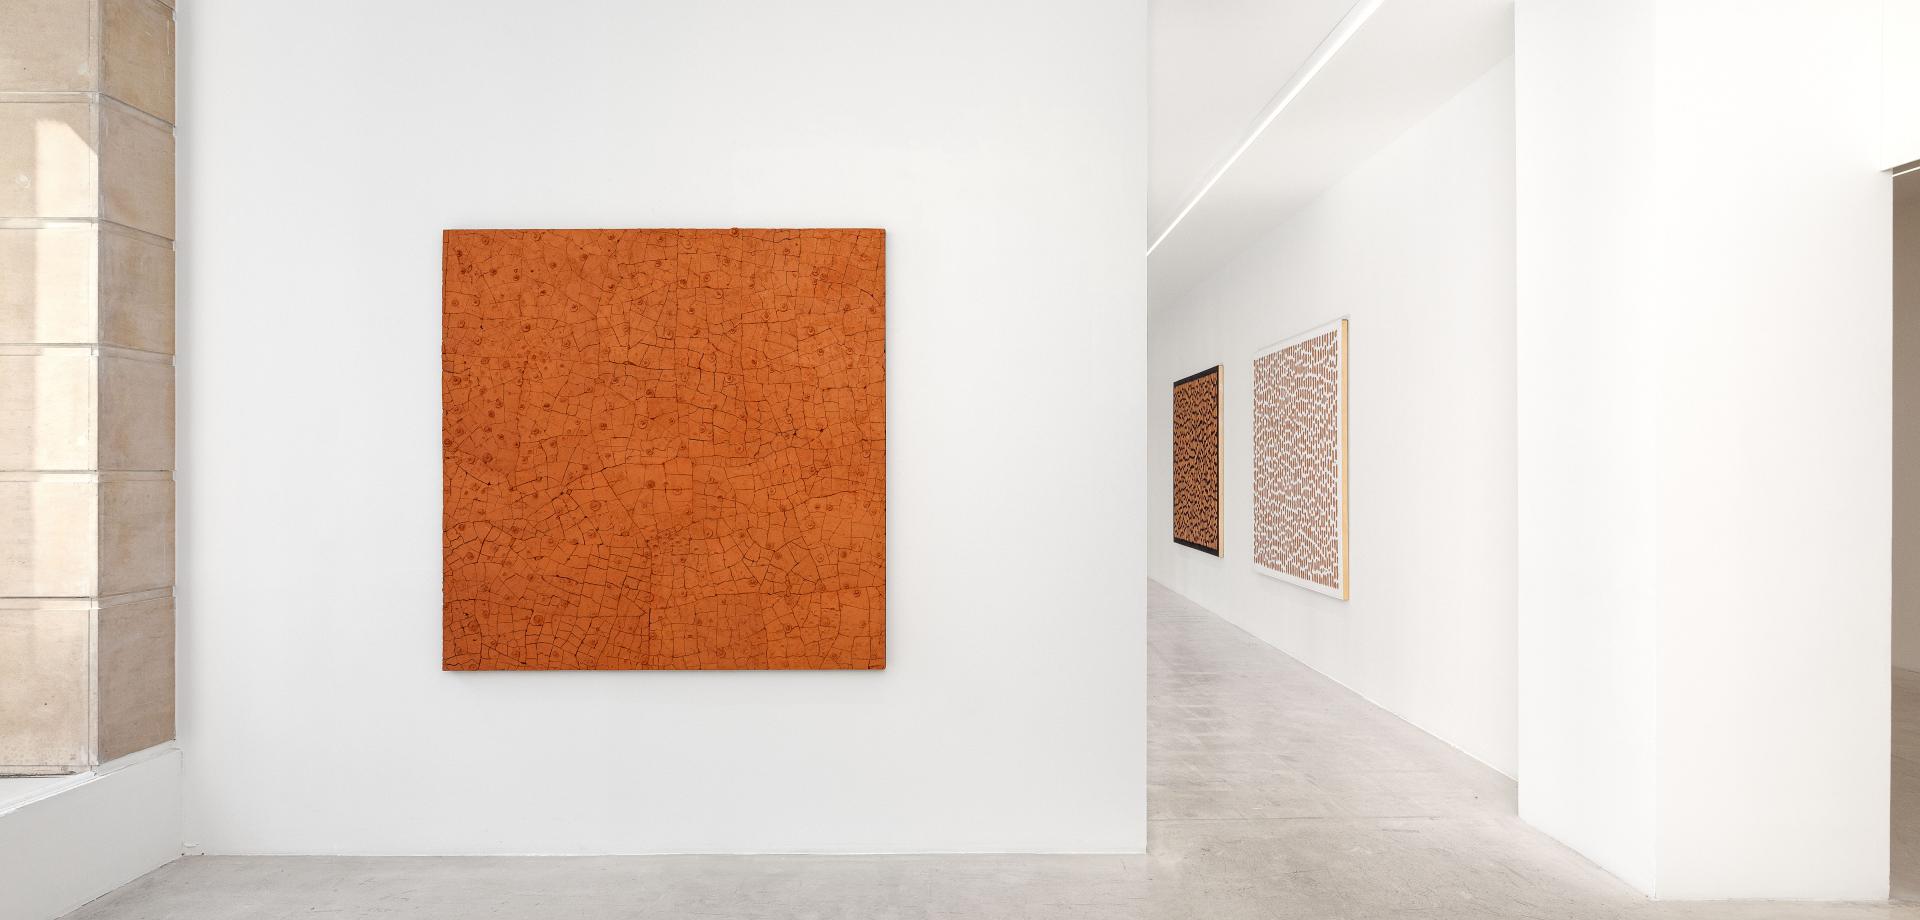 Galerie Italienne, Nacchere Della Luna, Luigi Mainolfi, 2022